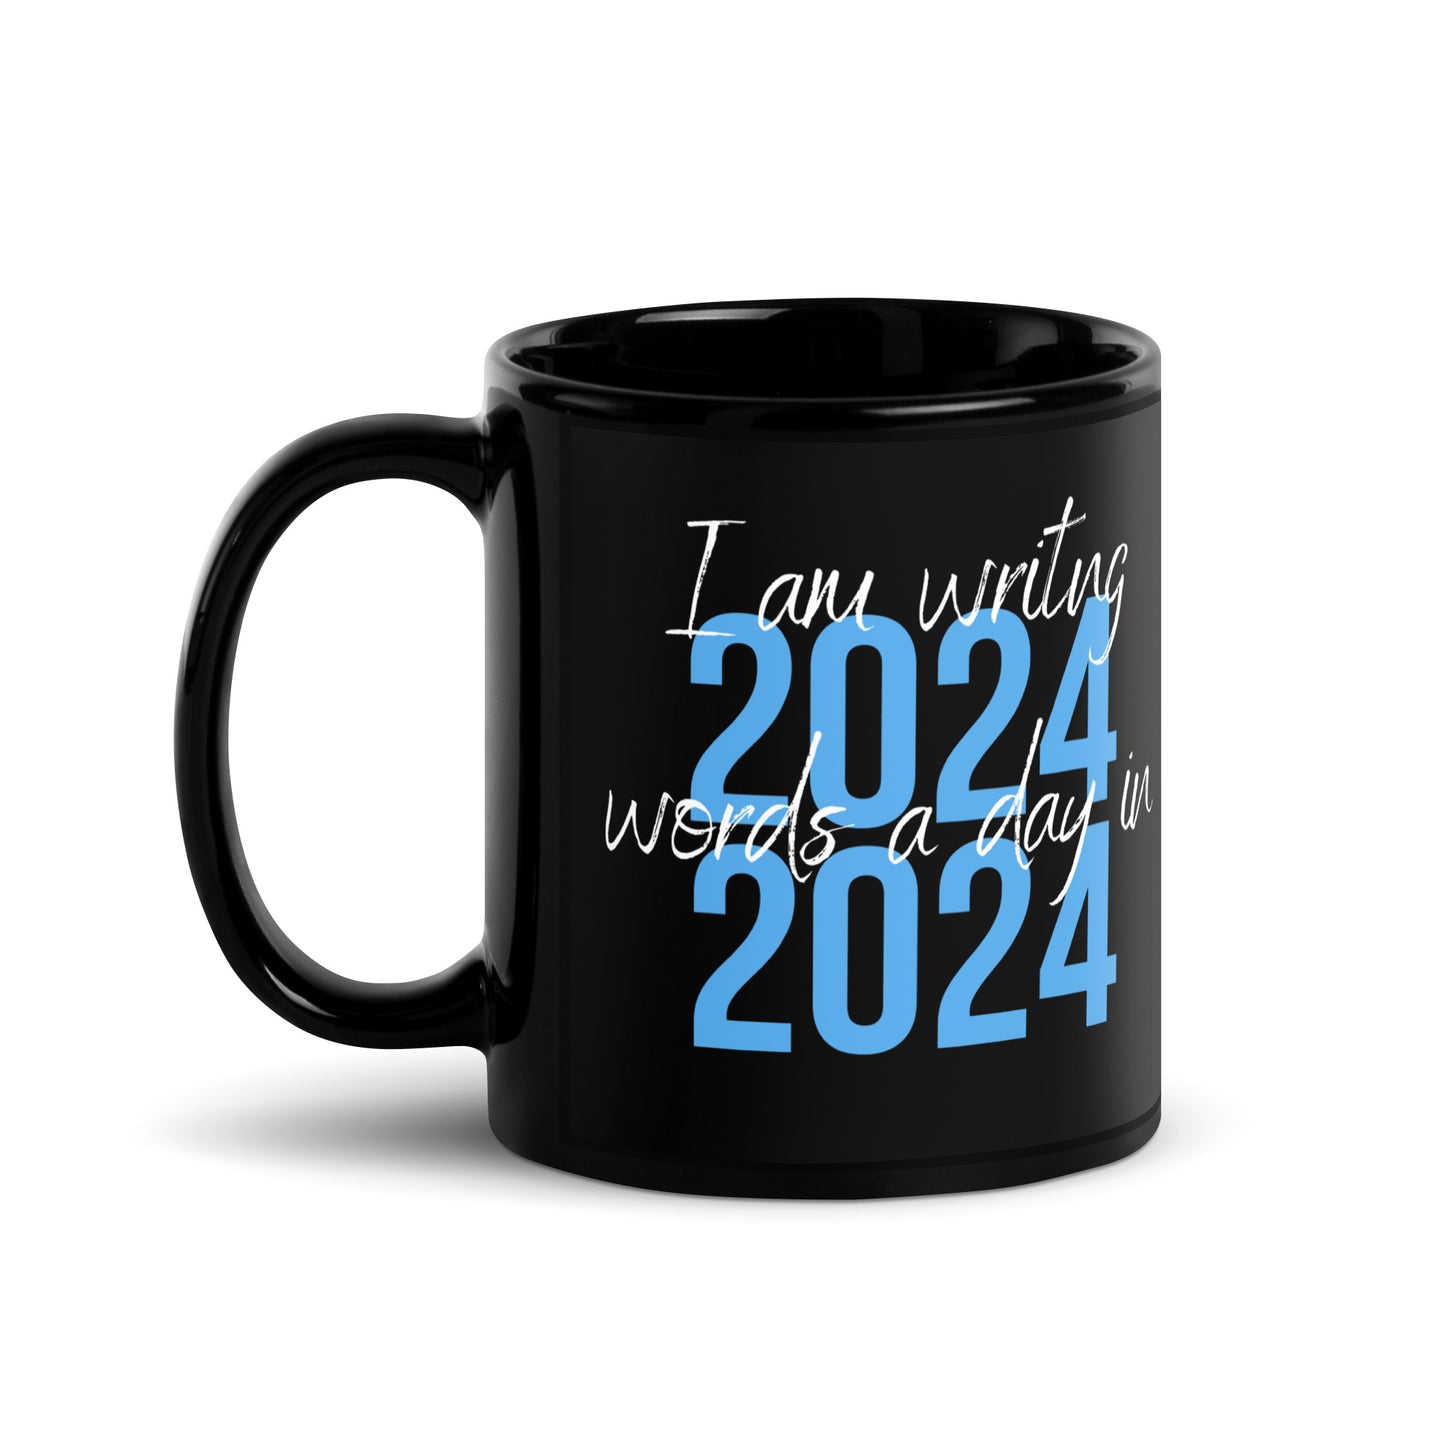 I AM WRITING 2024 WORDS Black Glossy Mug - WRITING CHALLENGES WMG Publishing